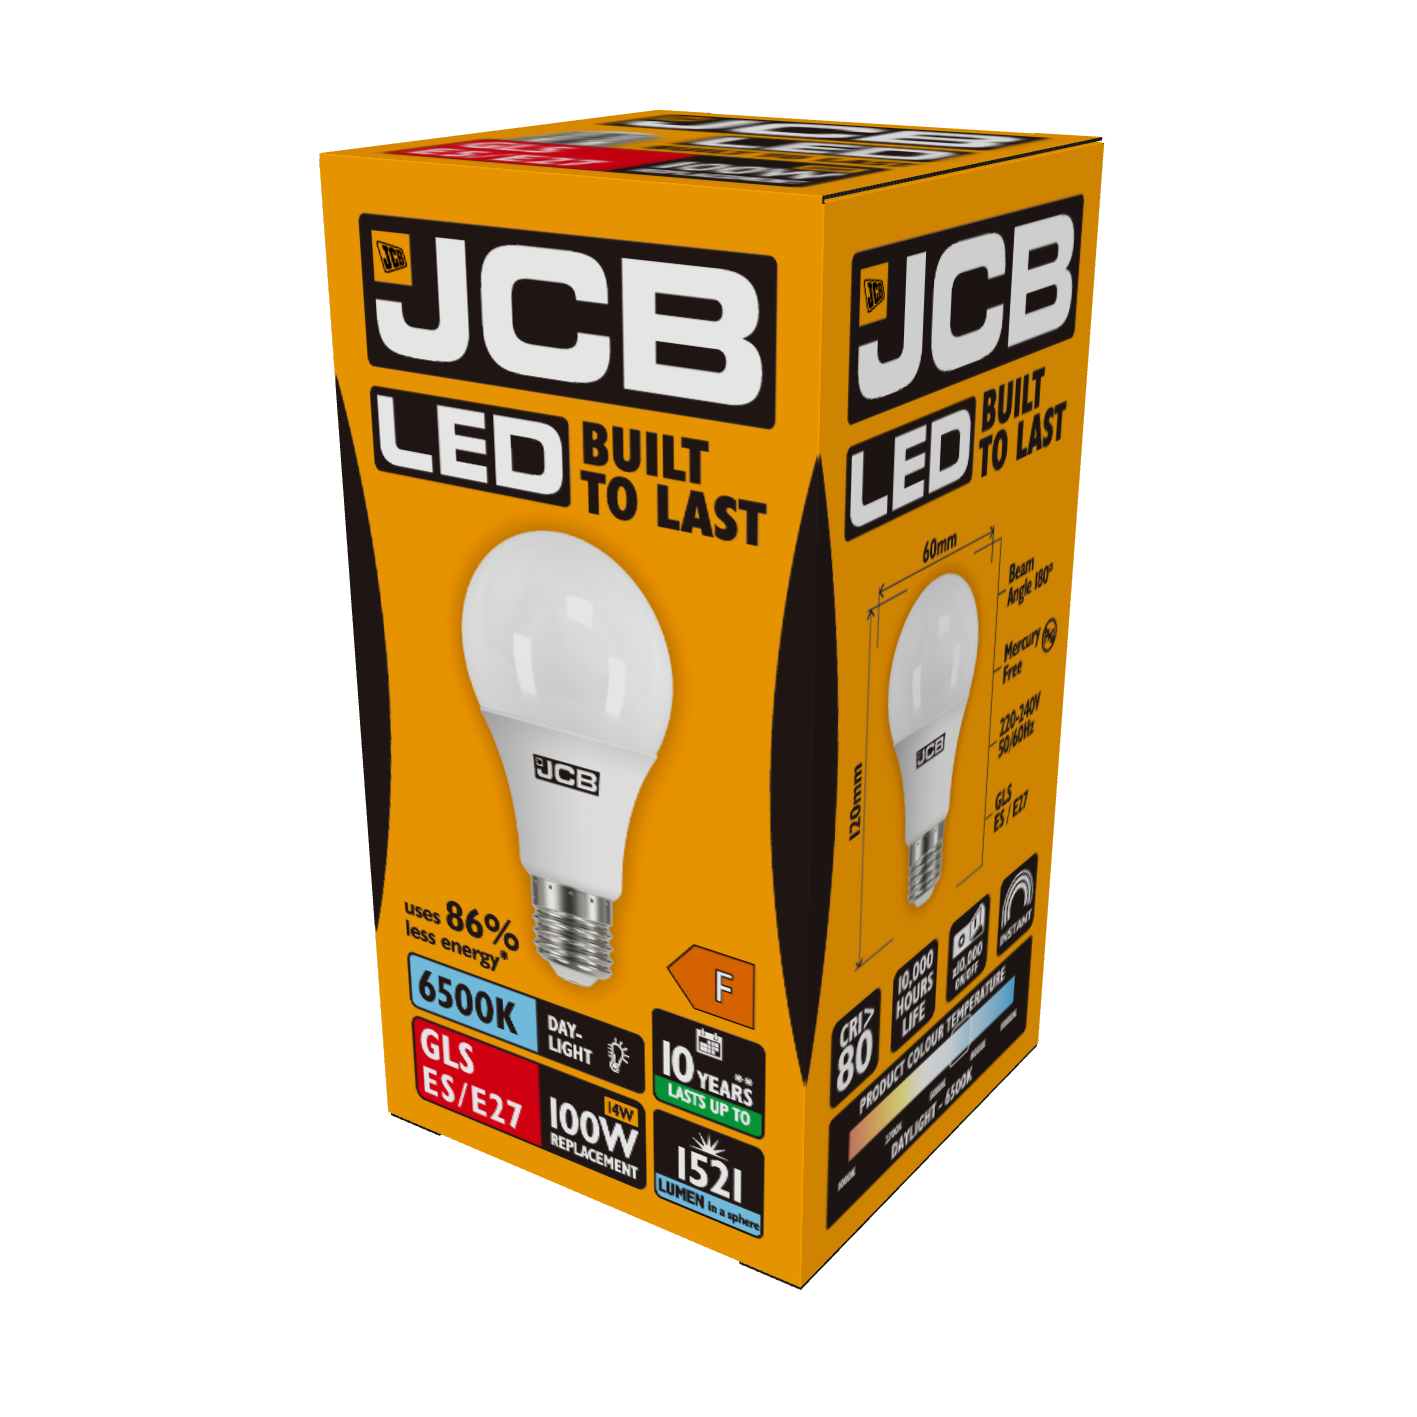 JCB LED GLS E27 (ES) 1,521lm 14W 6,500K (Daylight), Box of 1